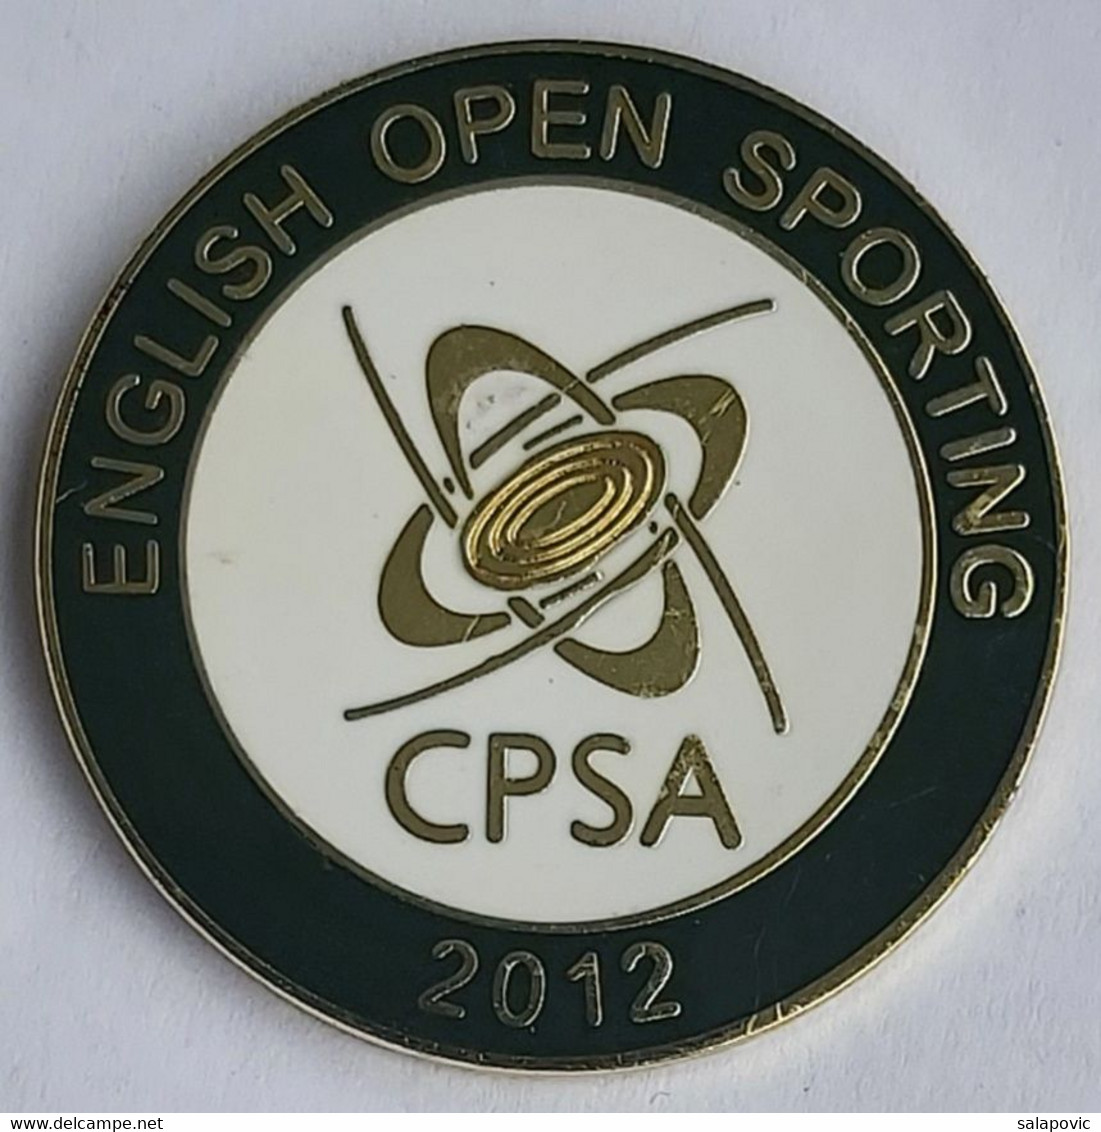 English Open Sporting (CPSA) Clay Pigeon Shooting Association 2012 Archery Shooting PINS BADGES A5/4 - Tir à L'Arc